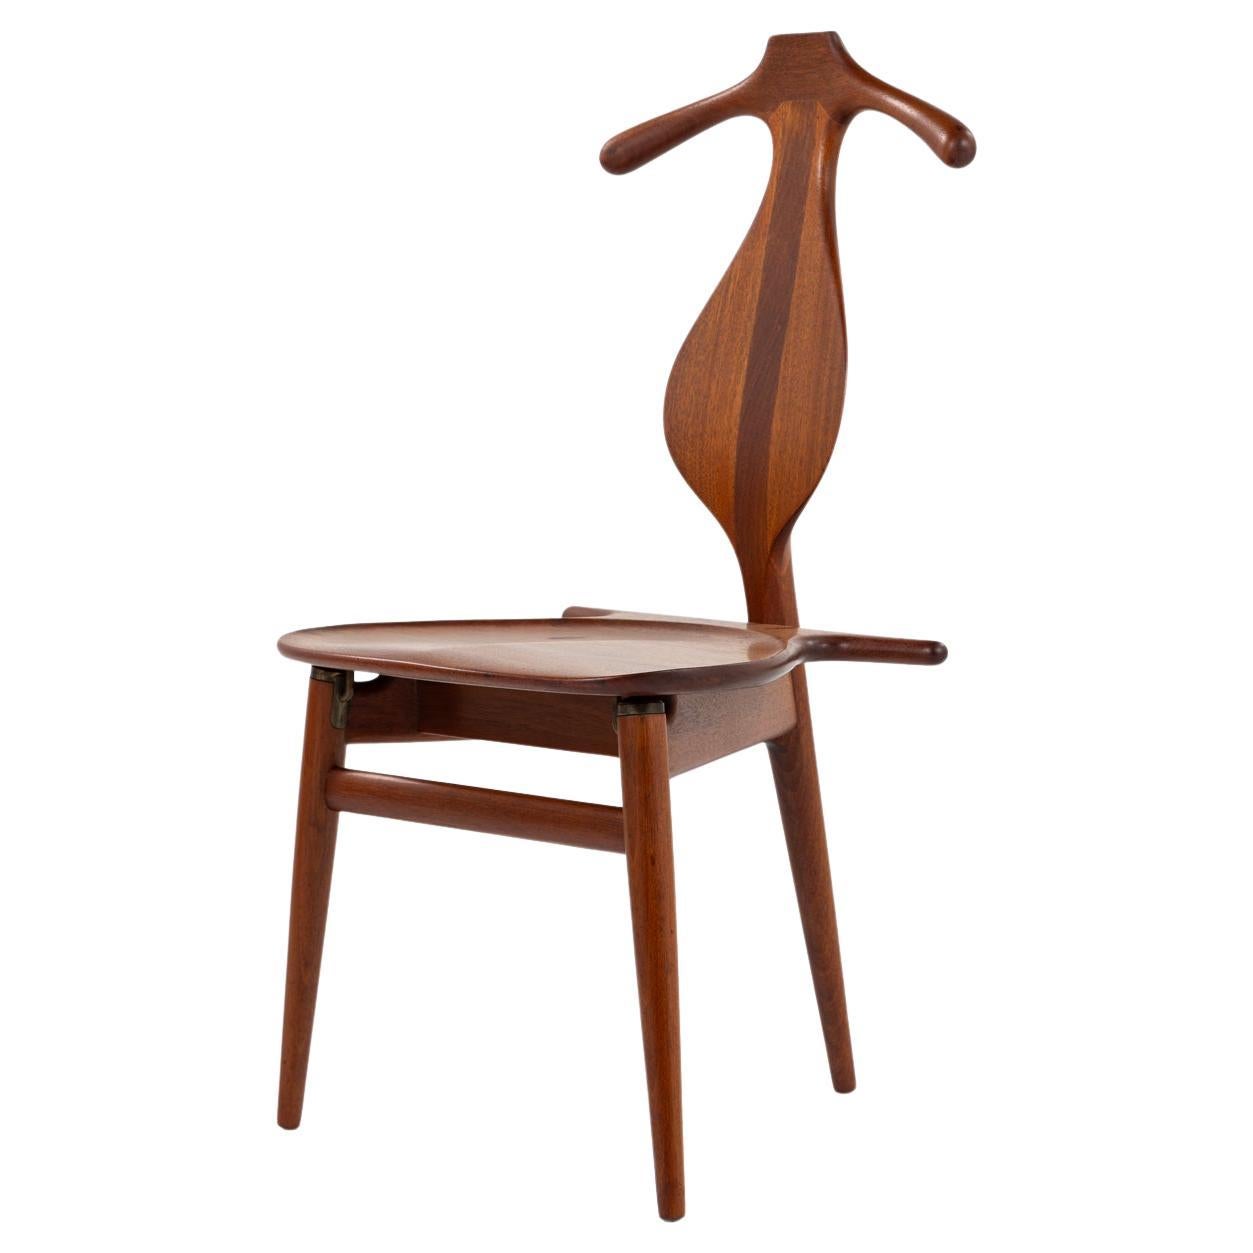 Who makes the original Wishbone Chair?